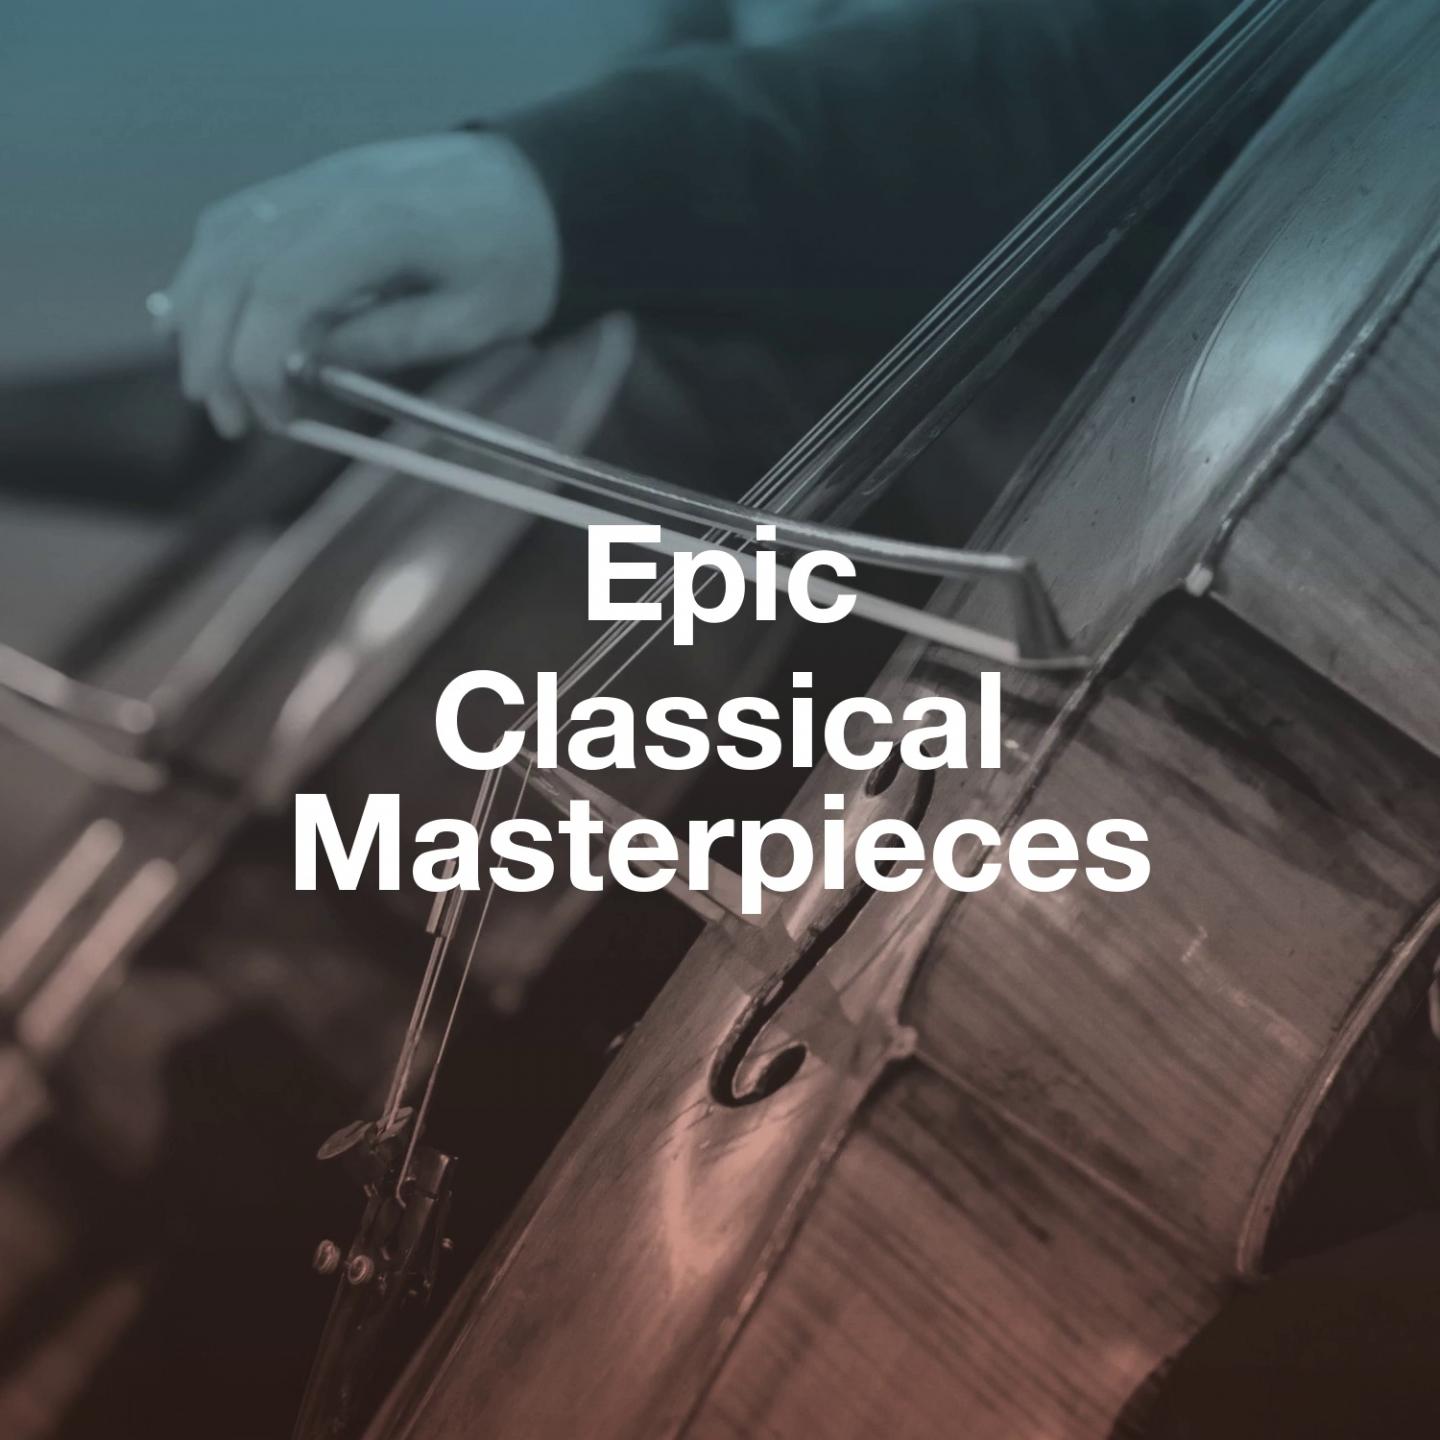 Epic Classical Masterpieces